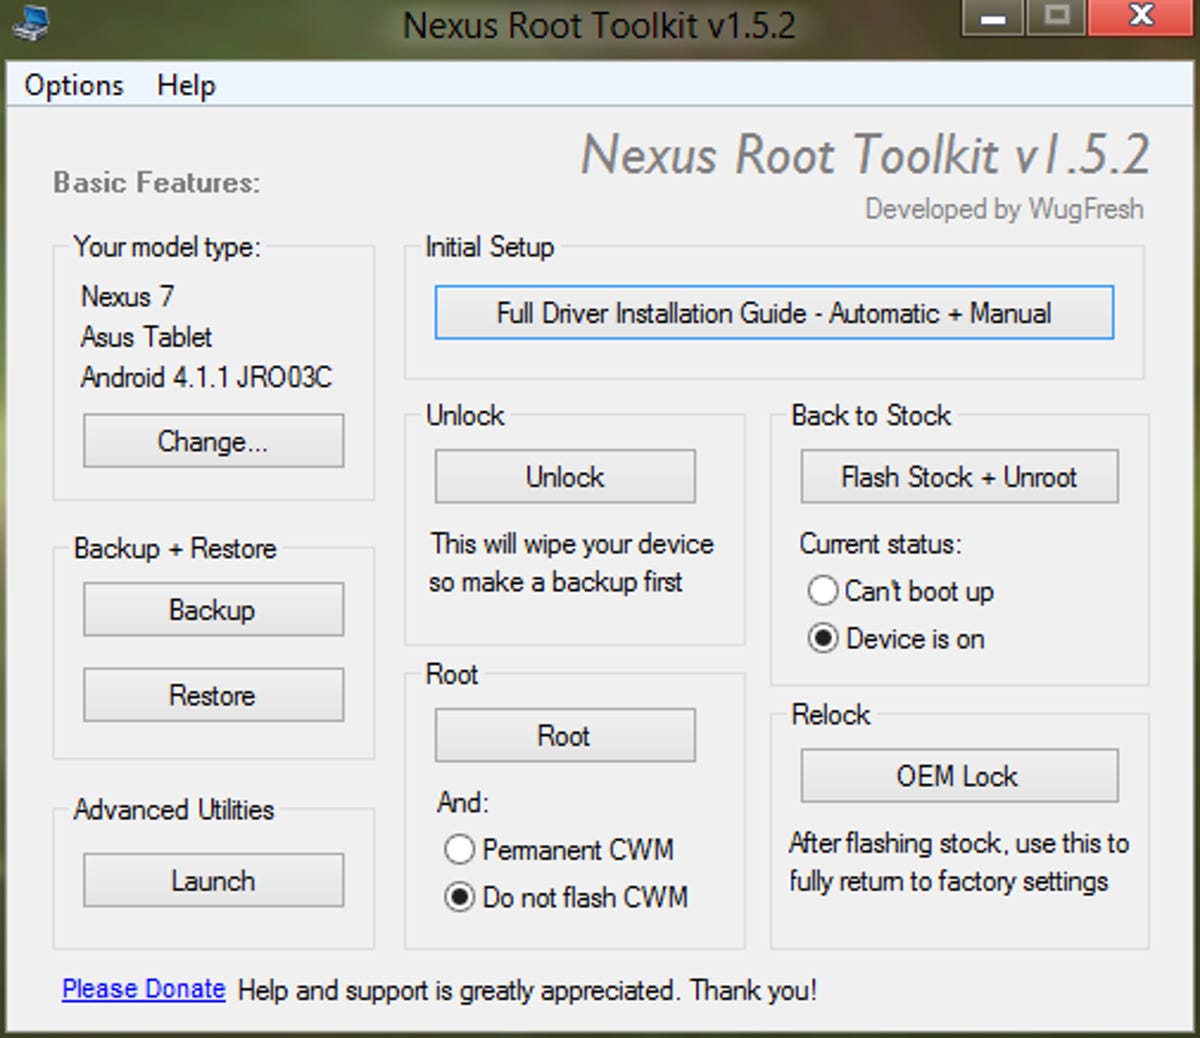 The Nexus Root Toolkit